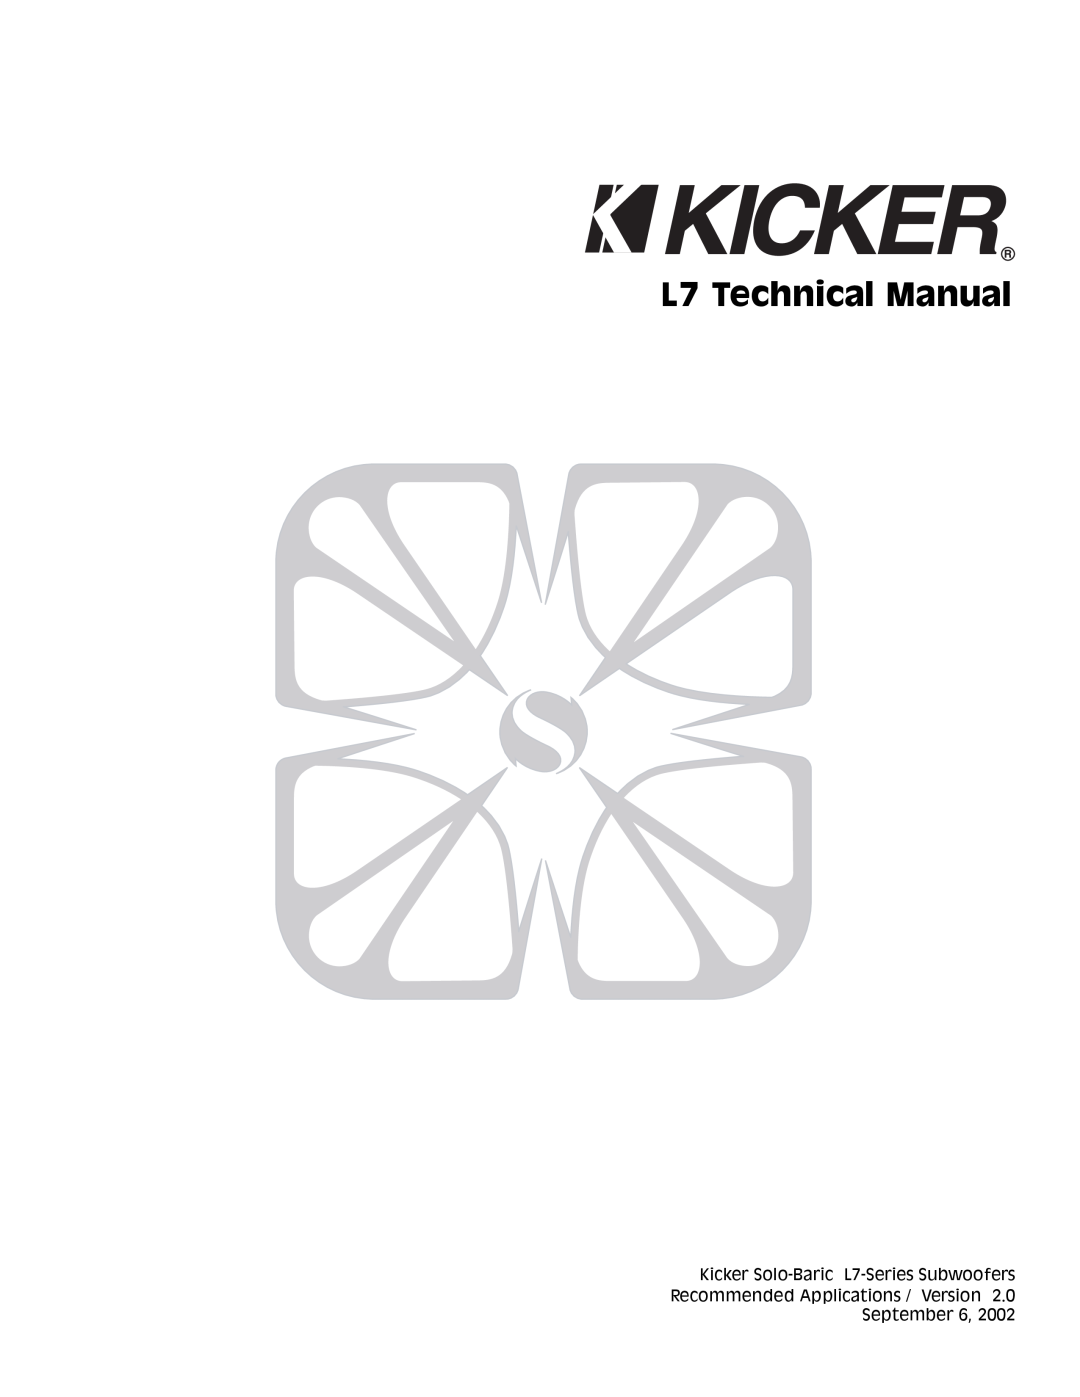 Kicker technical manual L7 Technical Manual, Kicker Solo-Baric L7-SeriesSubwoofers 